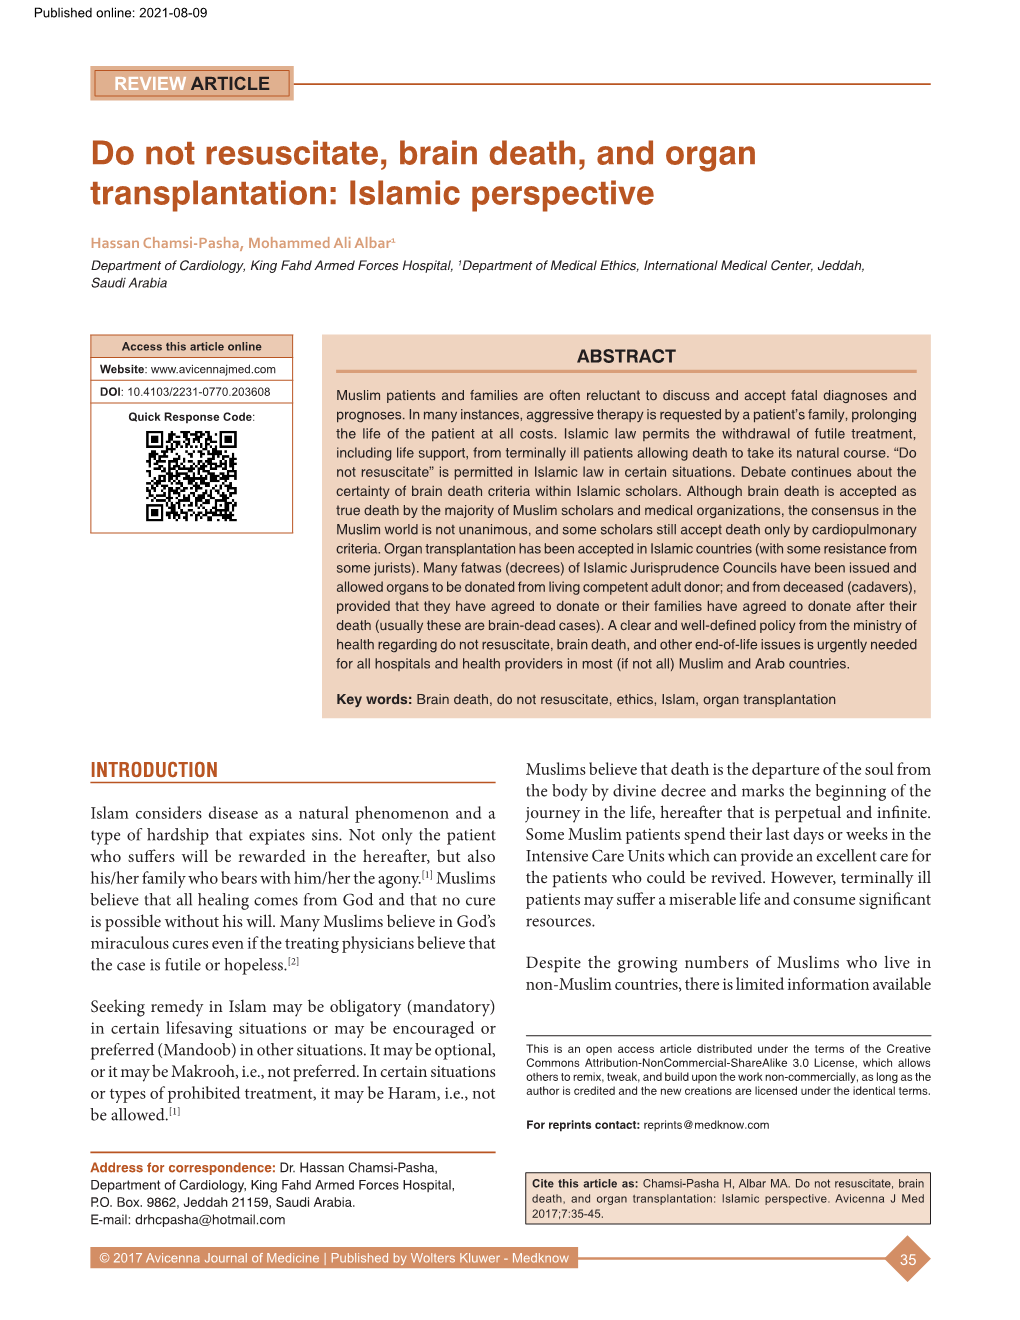 Do Not Resuscitate, Brain Death, and Organ Transplantation: Islamic Perspective